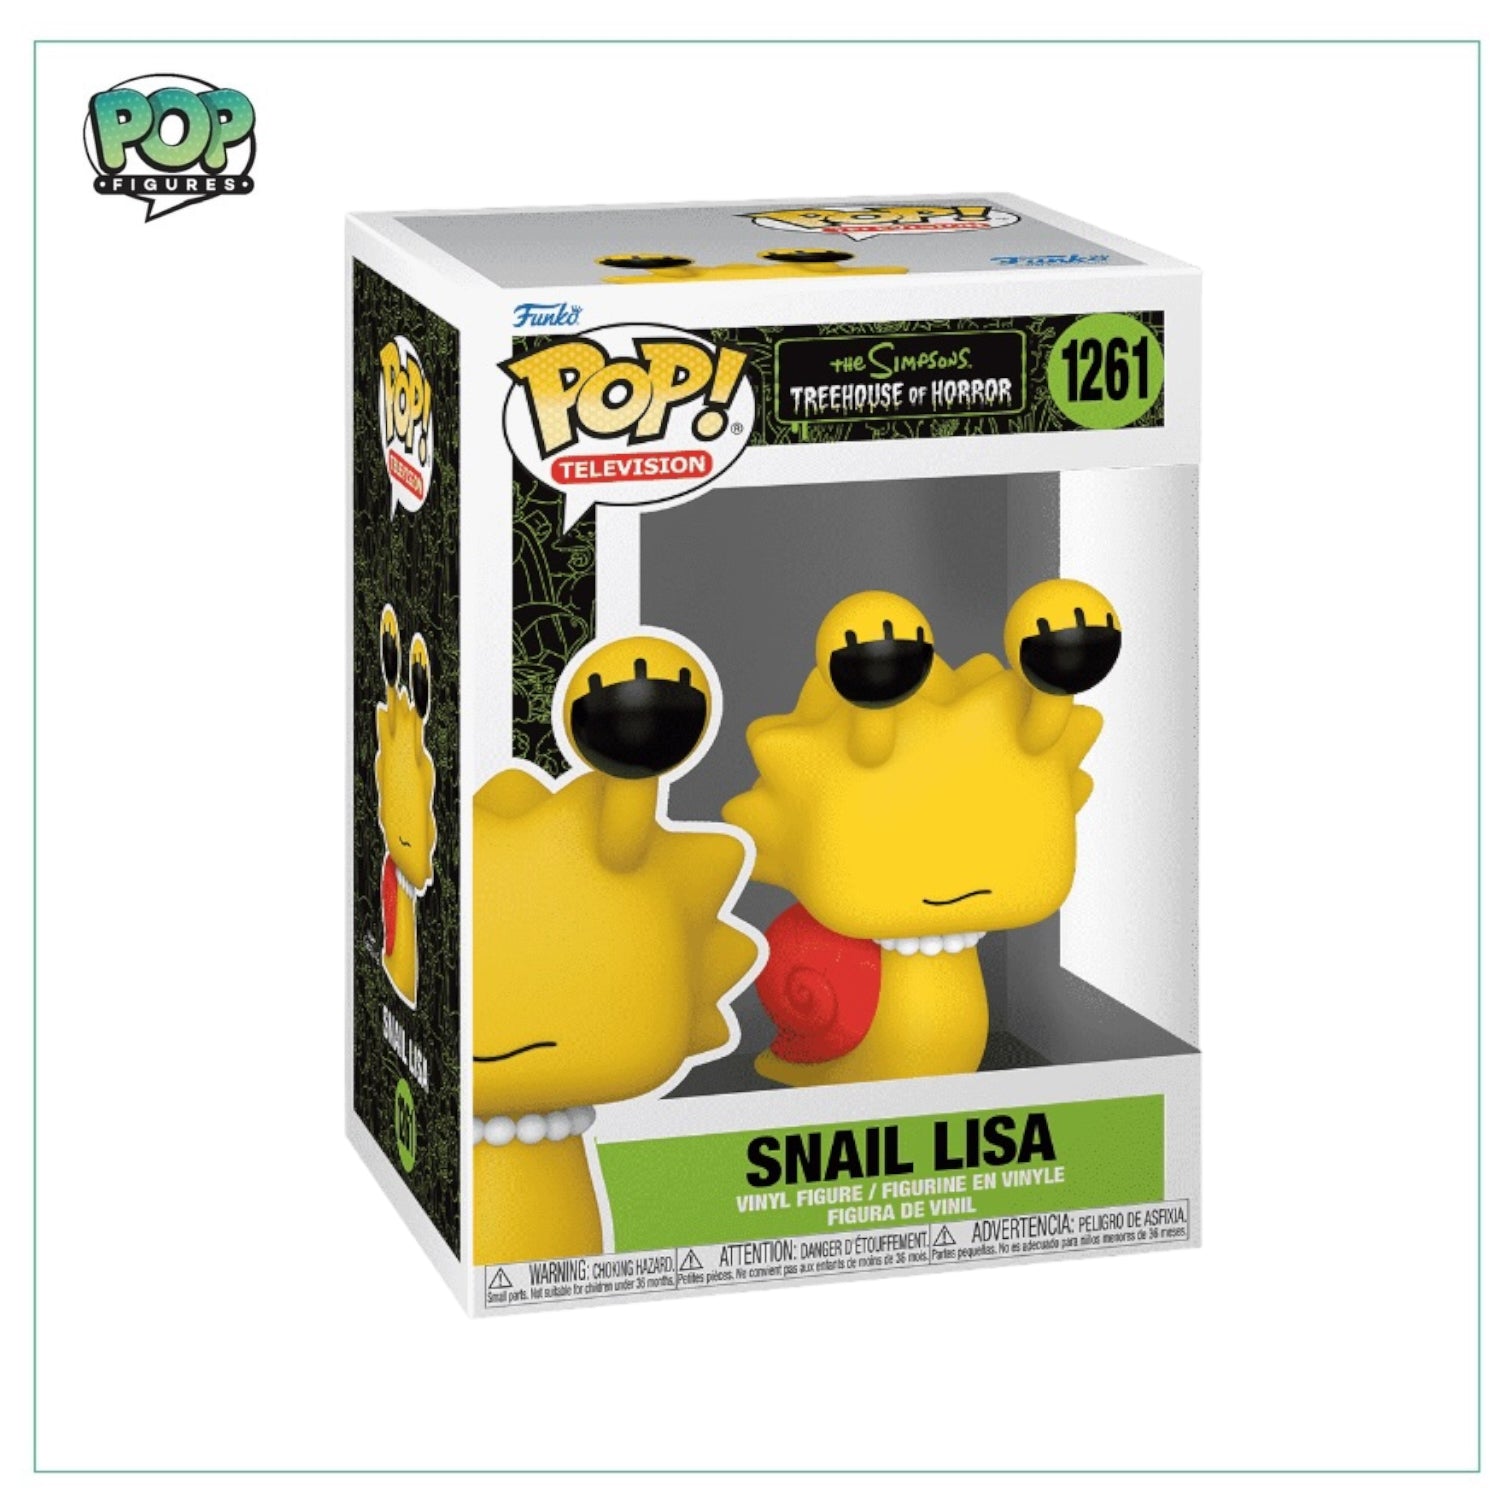 Snail Lisa #1261 Funko Pop! - The Simpsons Treehouse of Horror